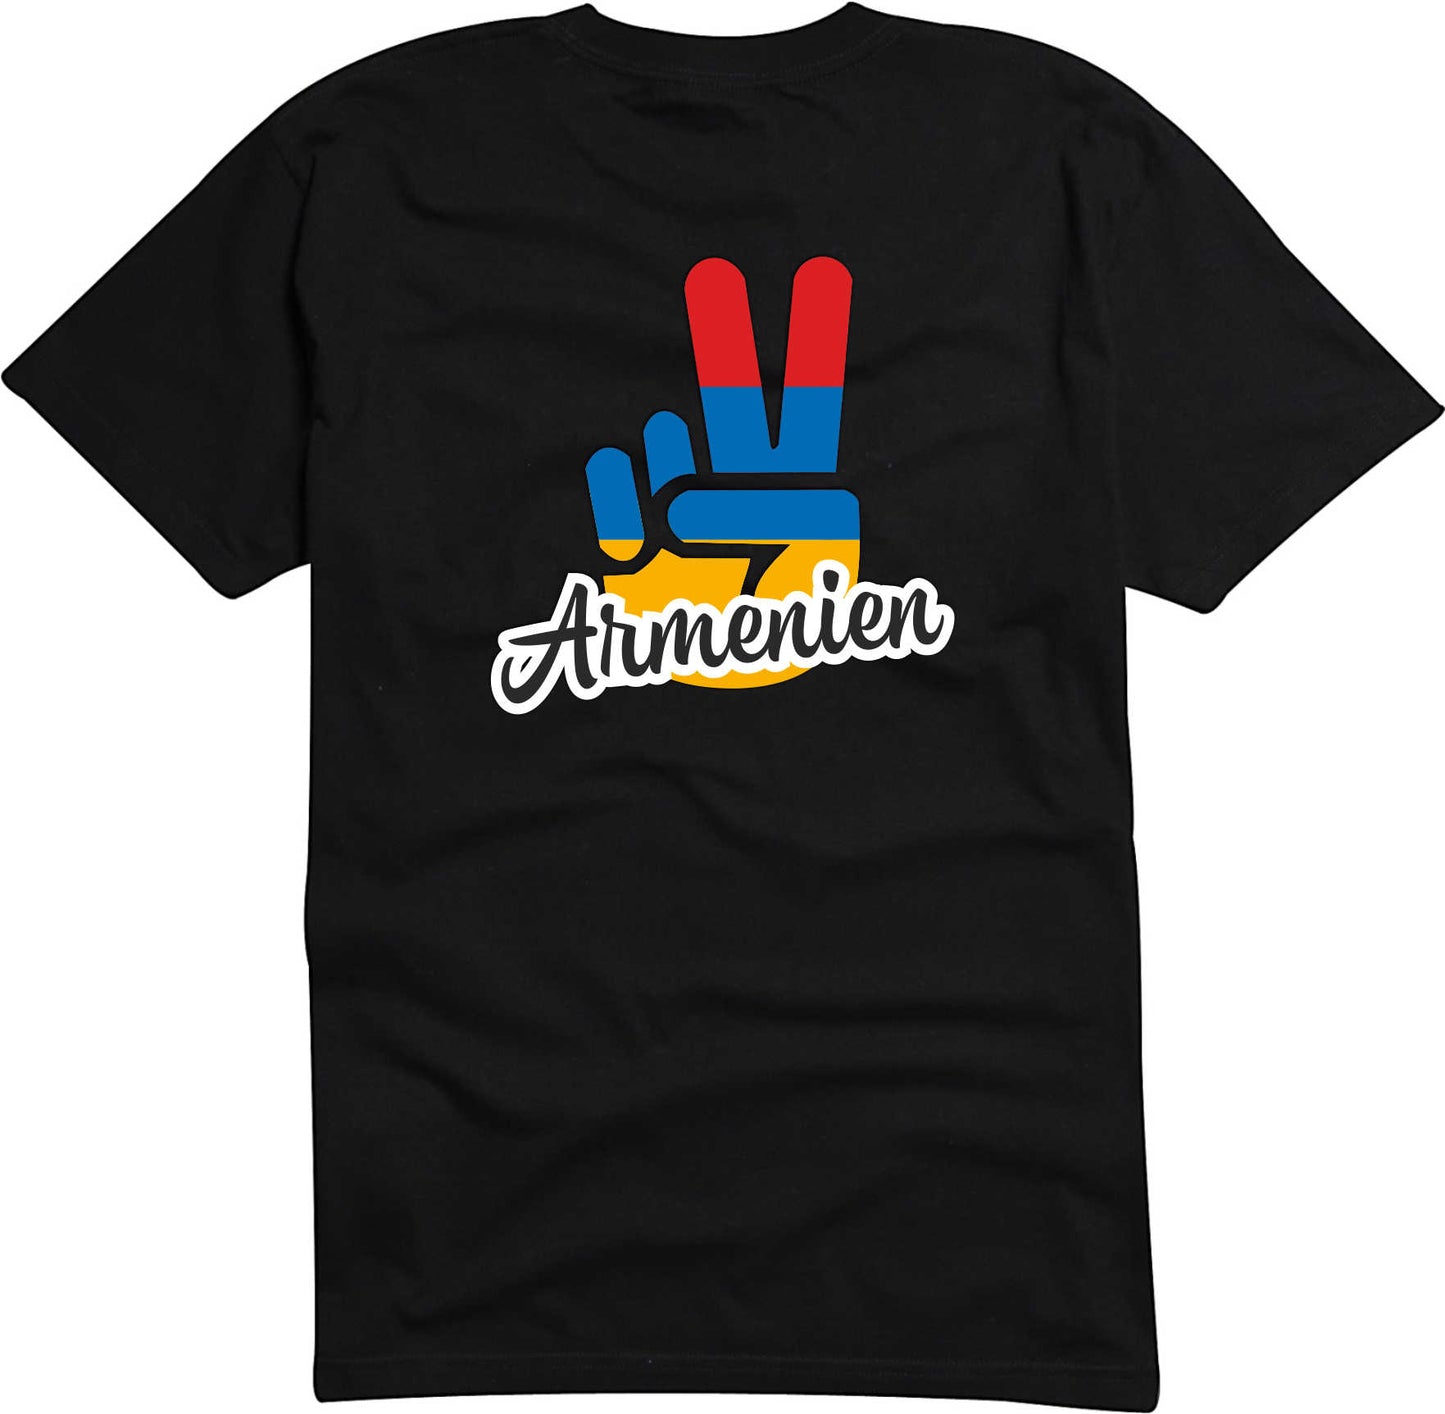 T-Shirt Herren - Victory - Flagge / Fahne - Armenien - Sieg